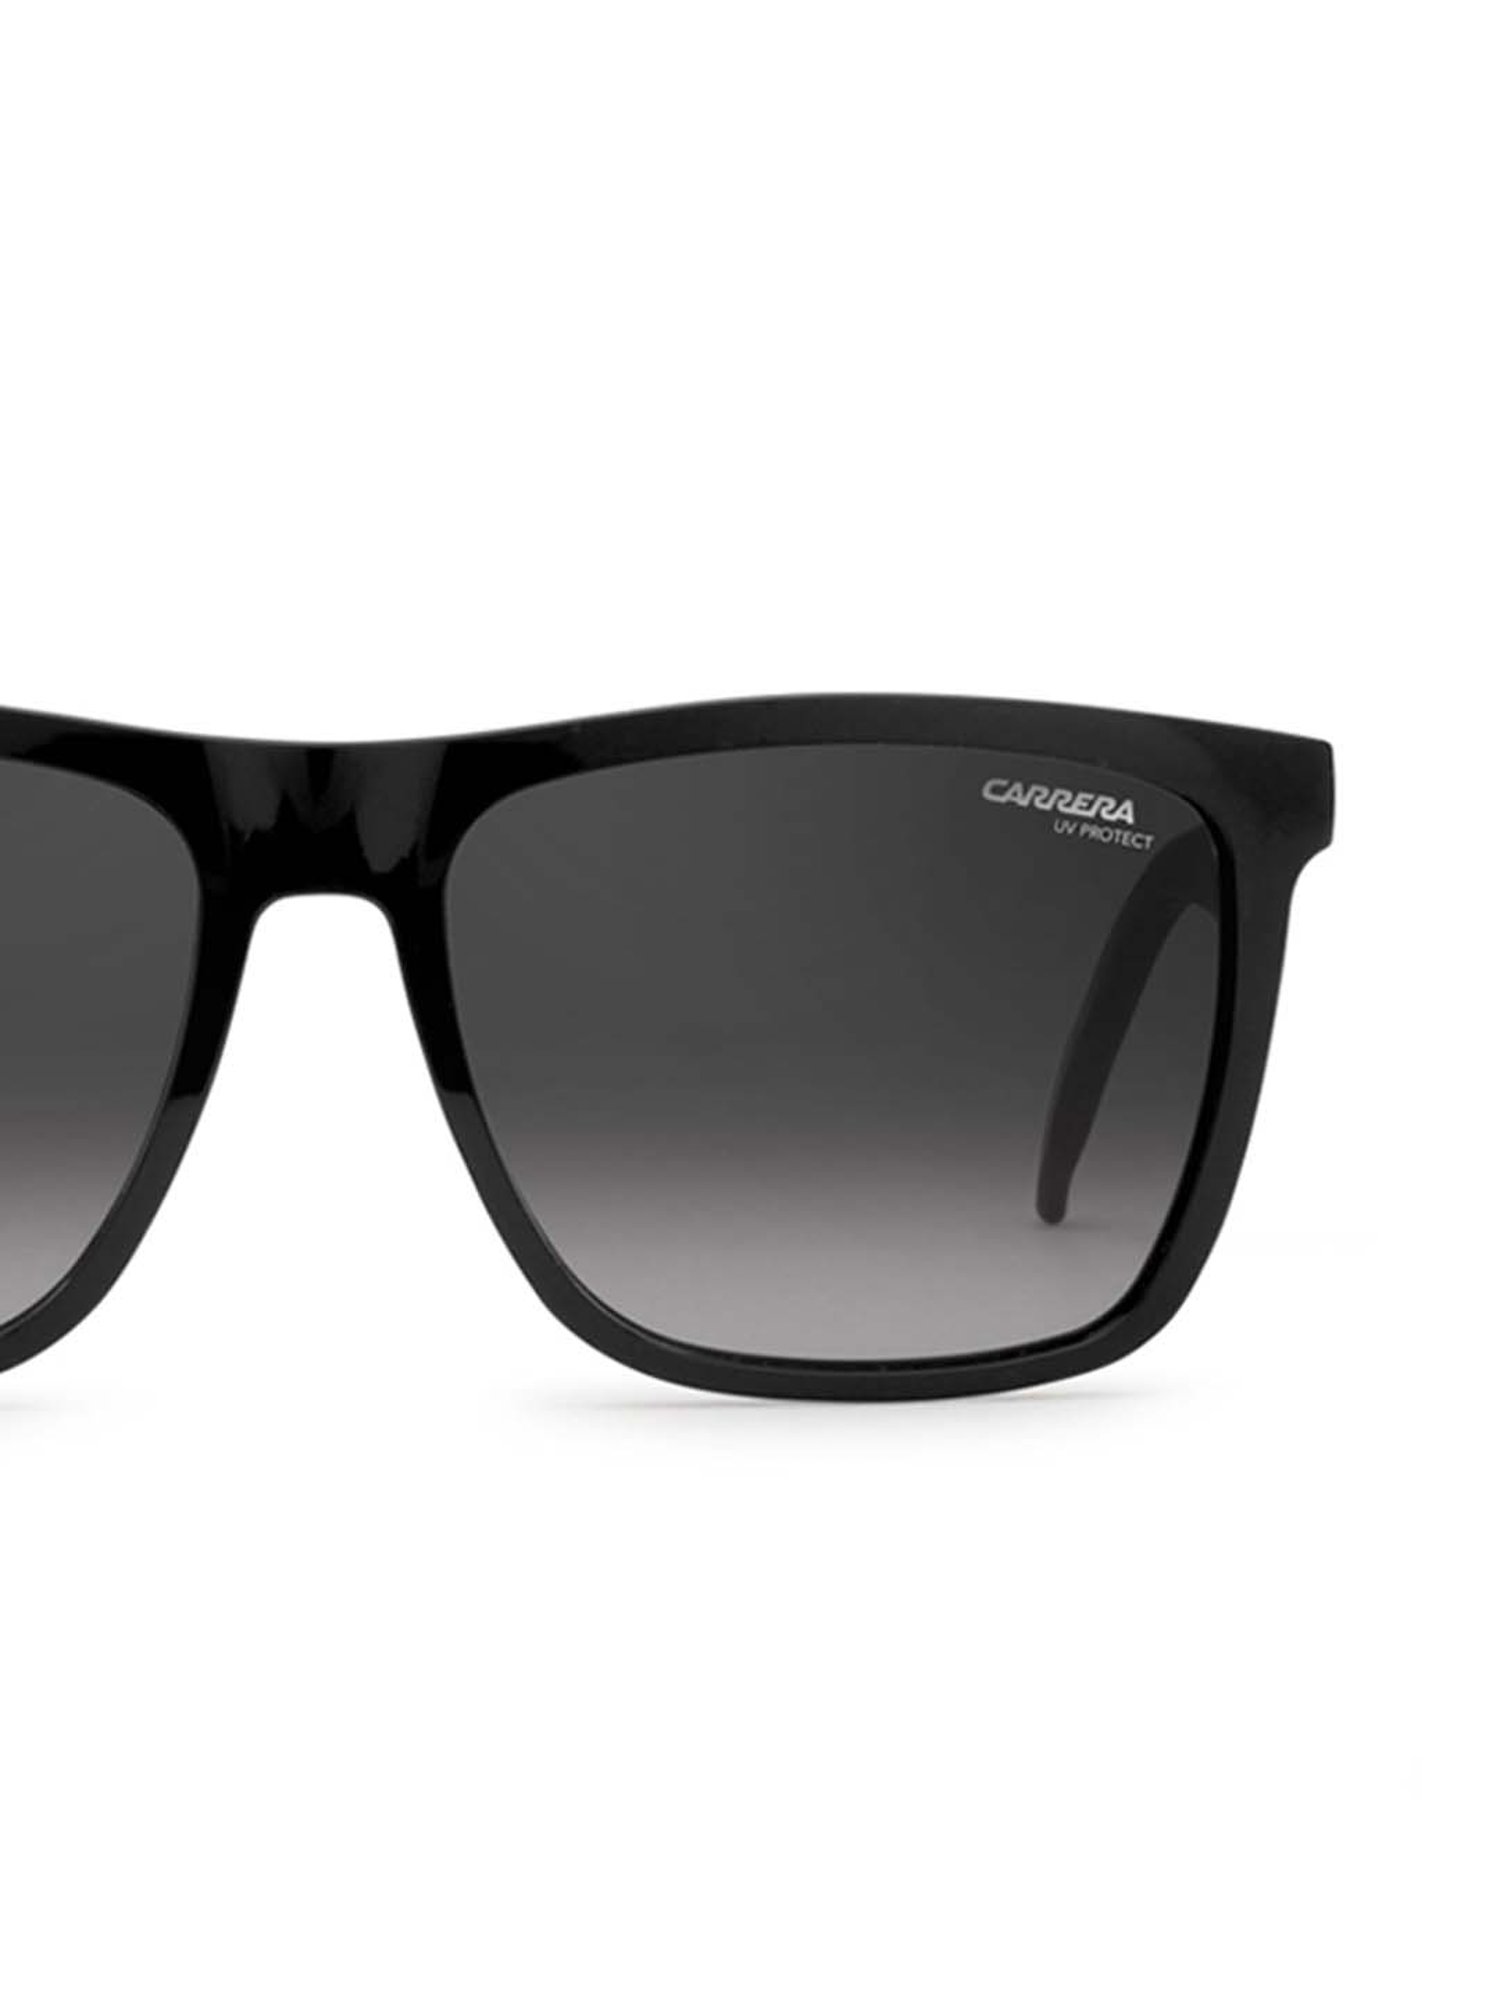 Carrera mens Carrera 5041/S Sunglasses, Black/Dark Gray Gradient, 56mm  762753614025 | eBay